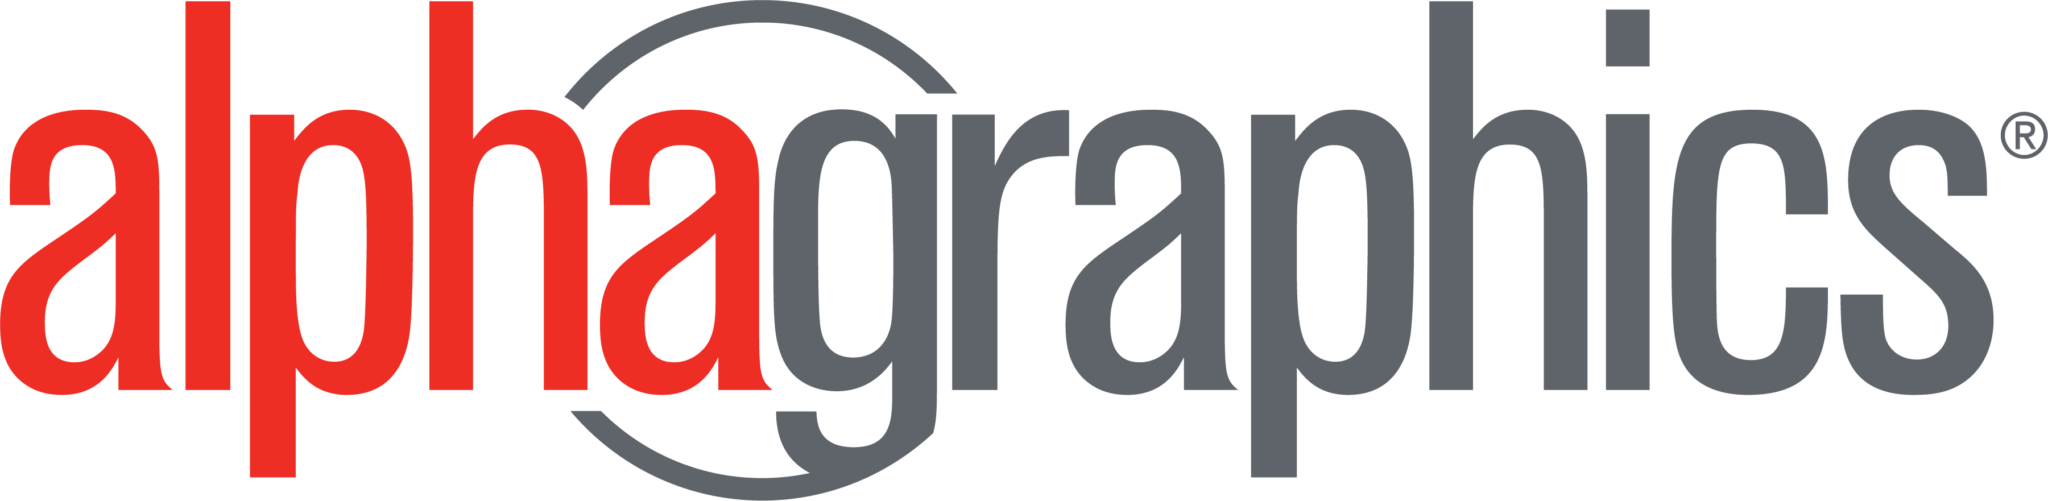 AlphaGraphics logo